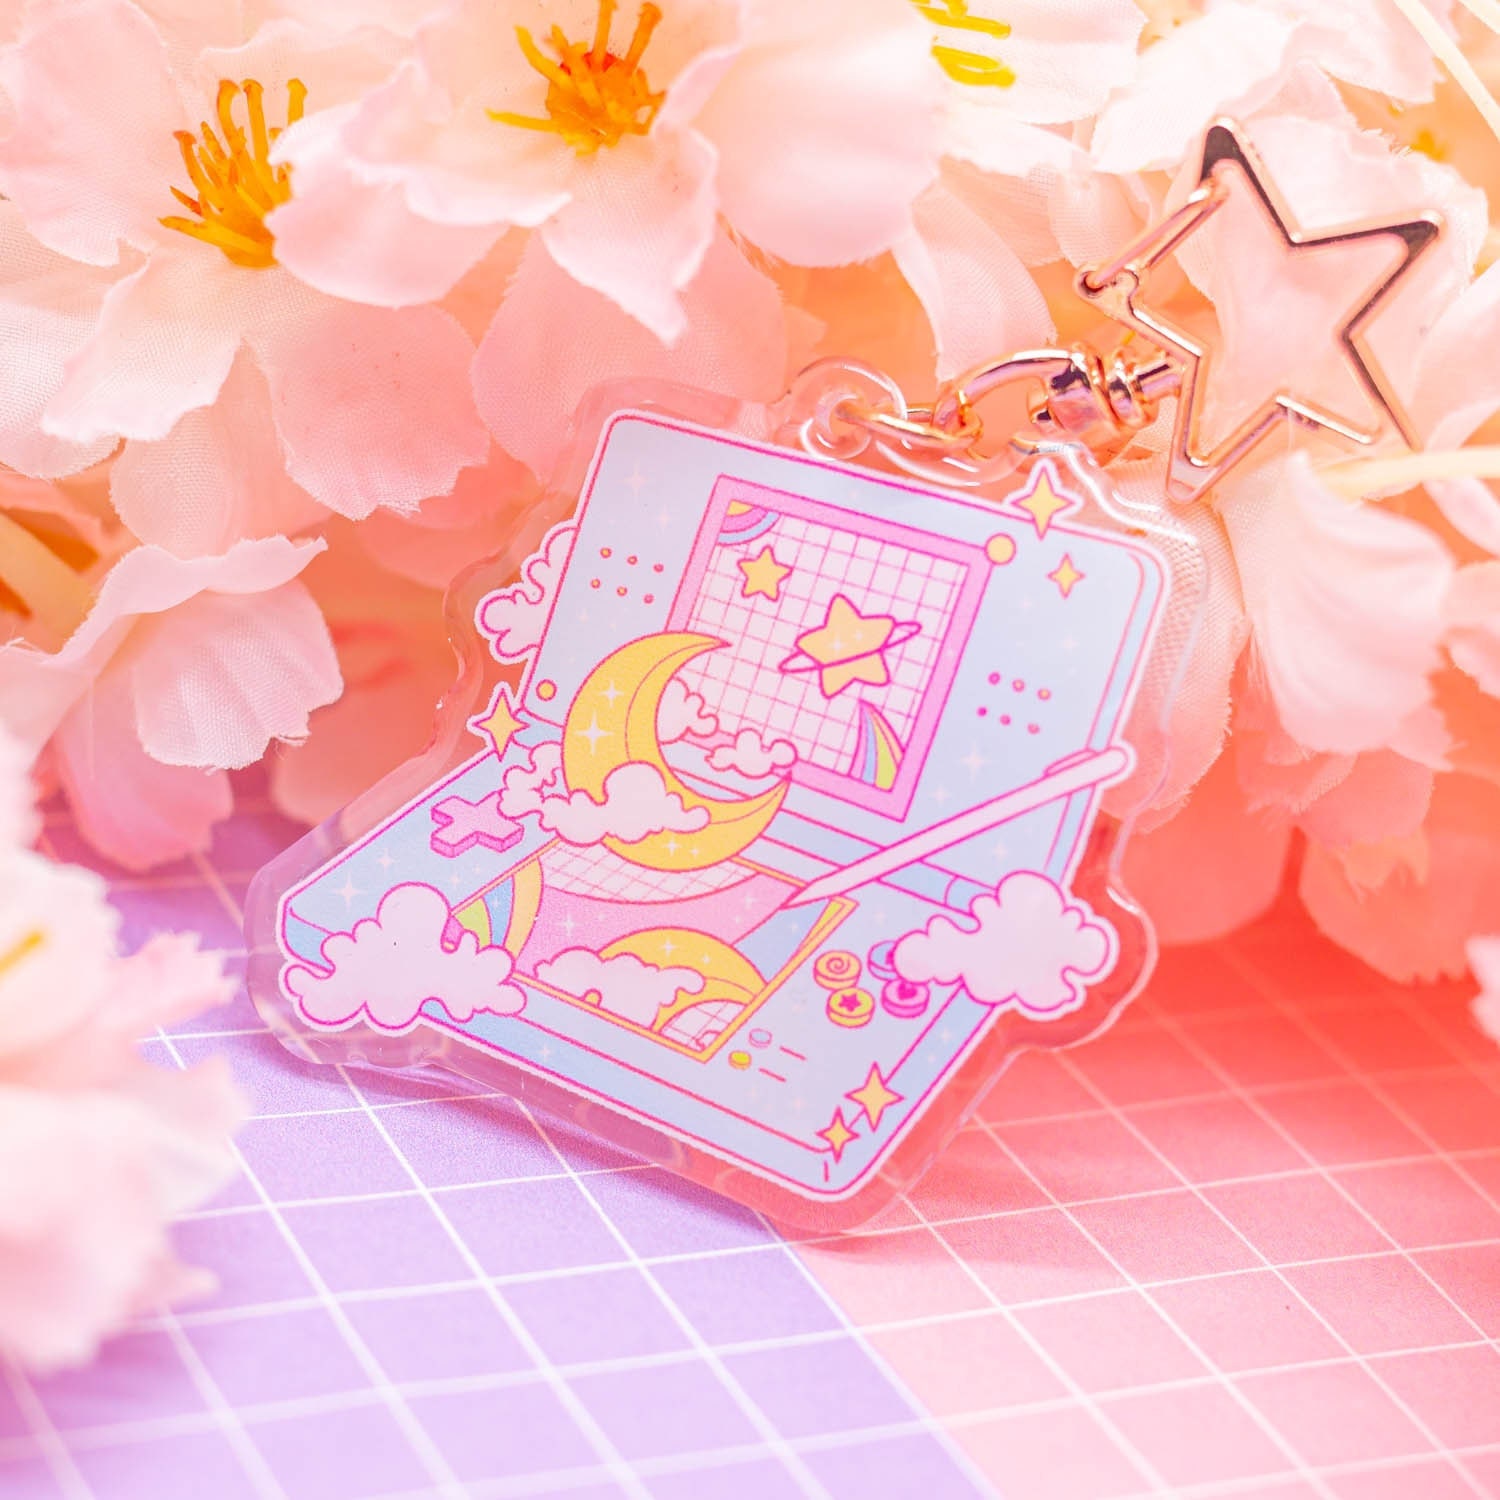 Kawaii Phone Charms, Cute Pastel Keychain, Planner Charm, Bunny